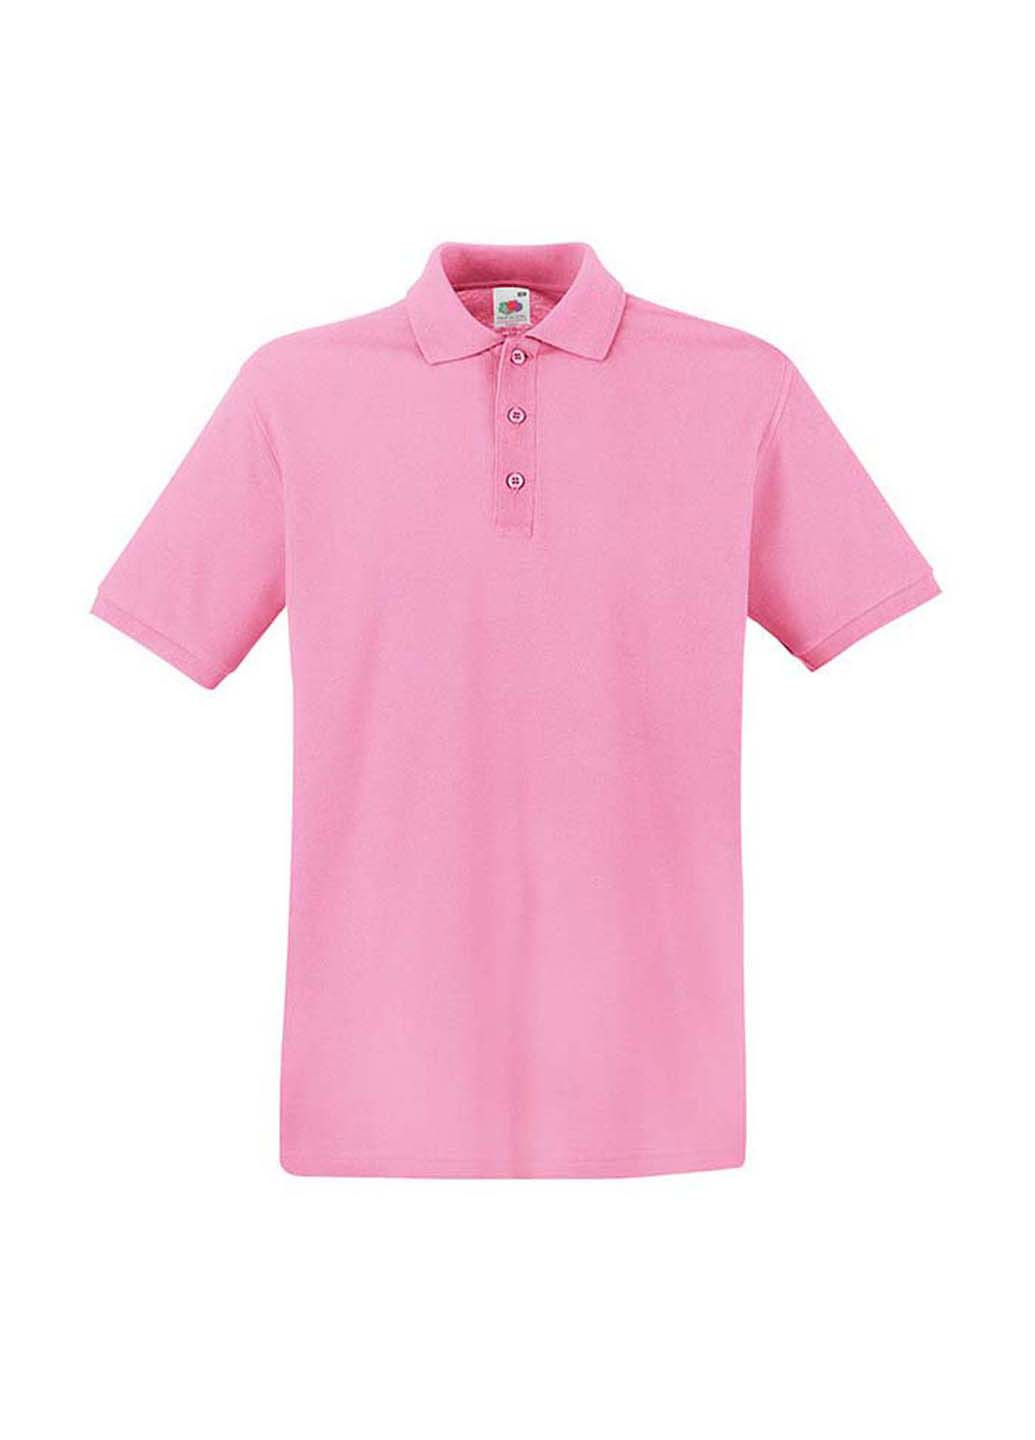 Светло-розовая футболка-поло для мужчин Fruit of the Loom